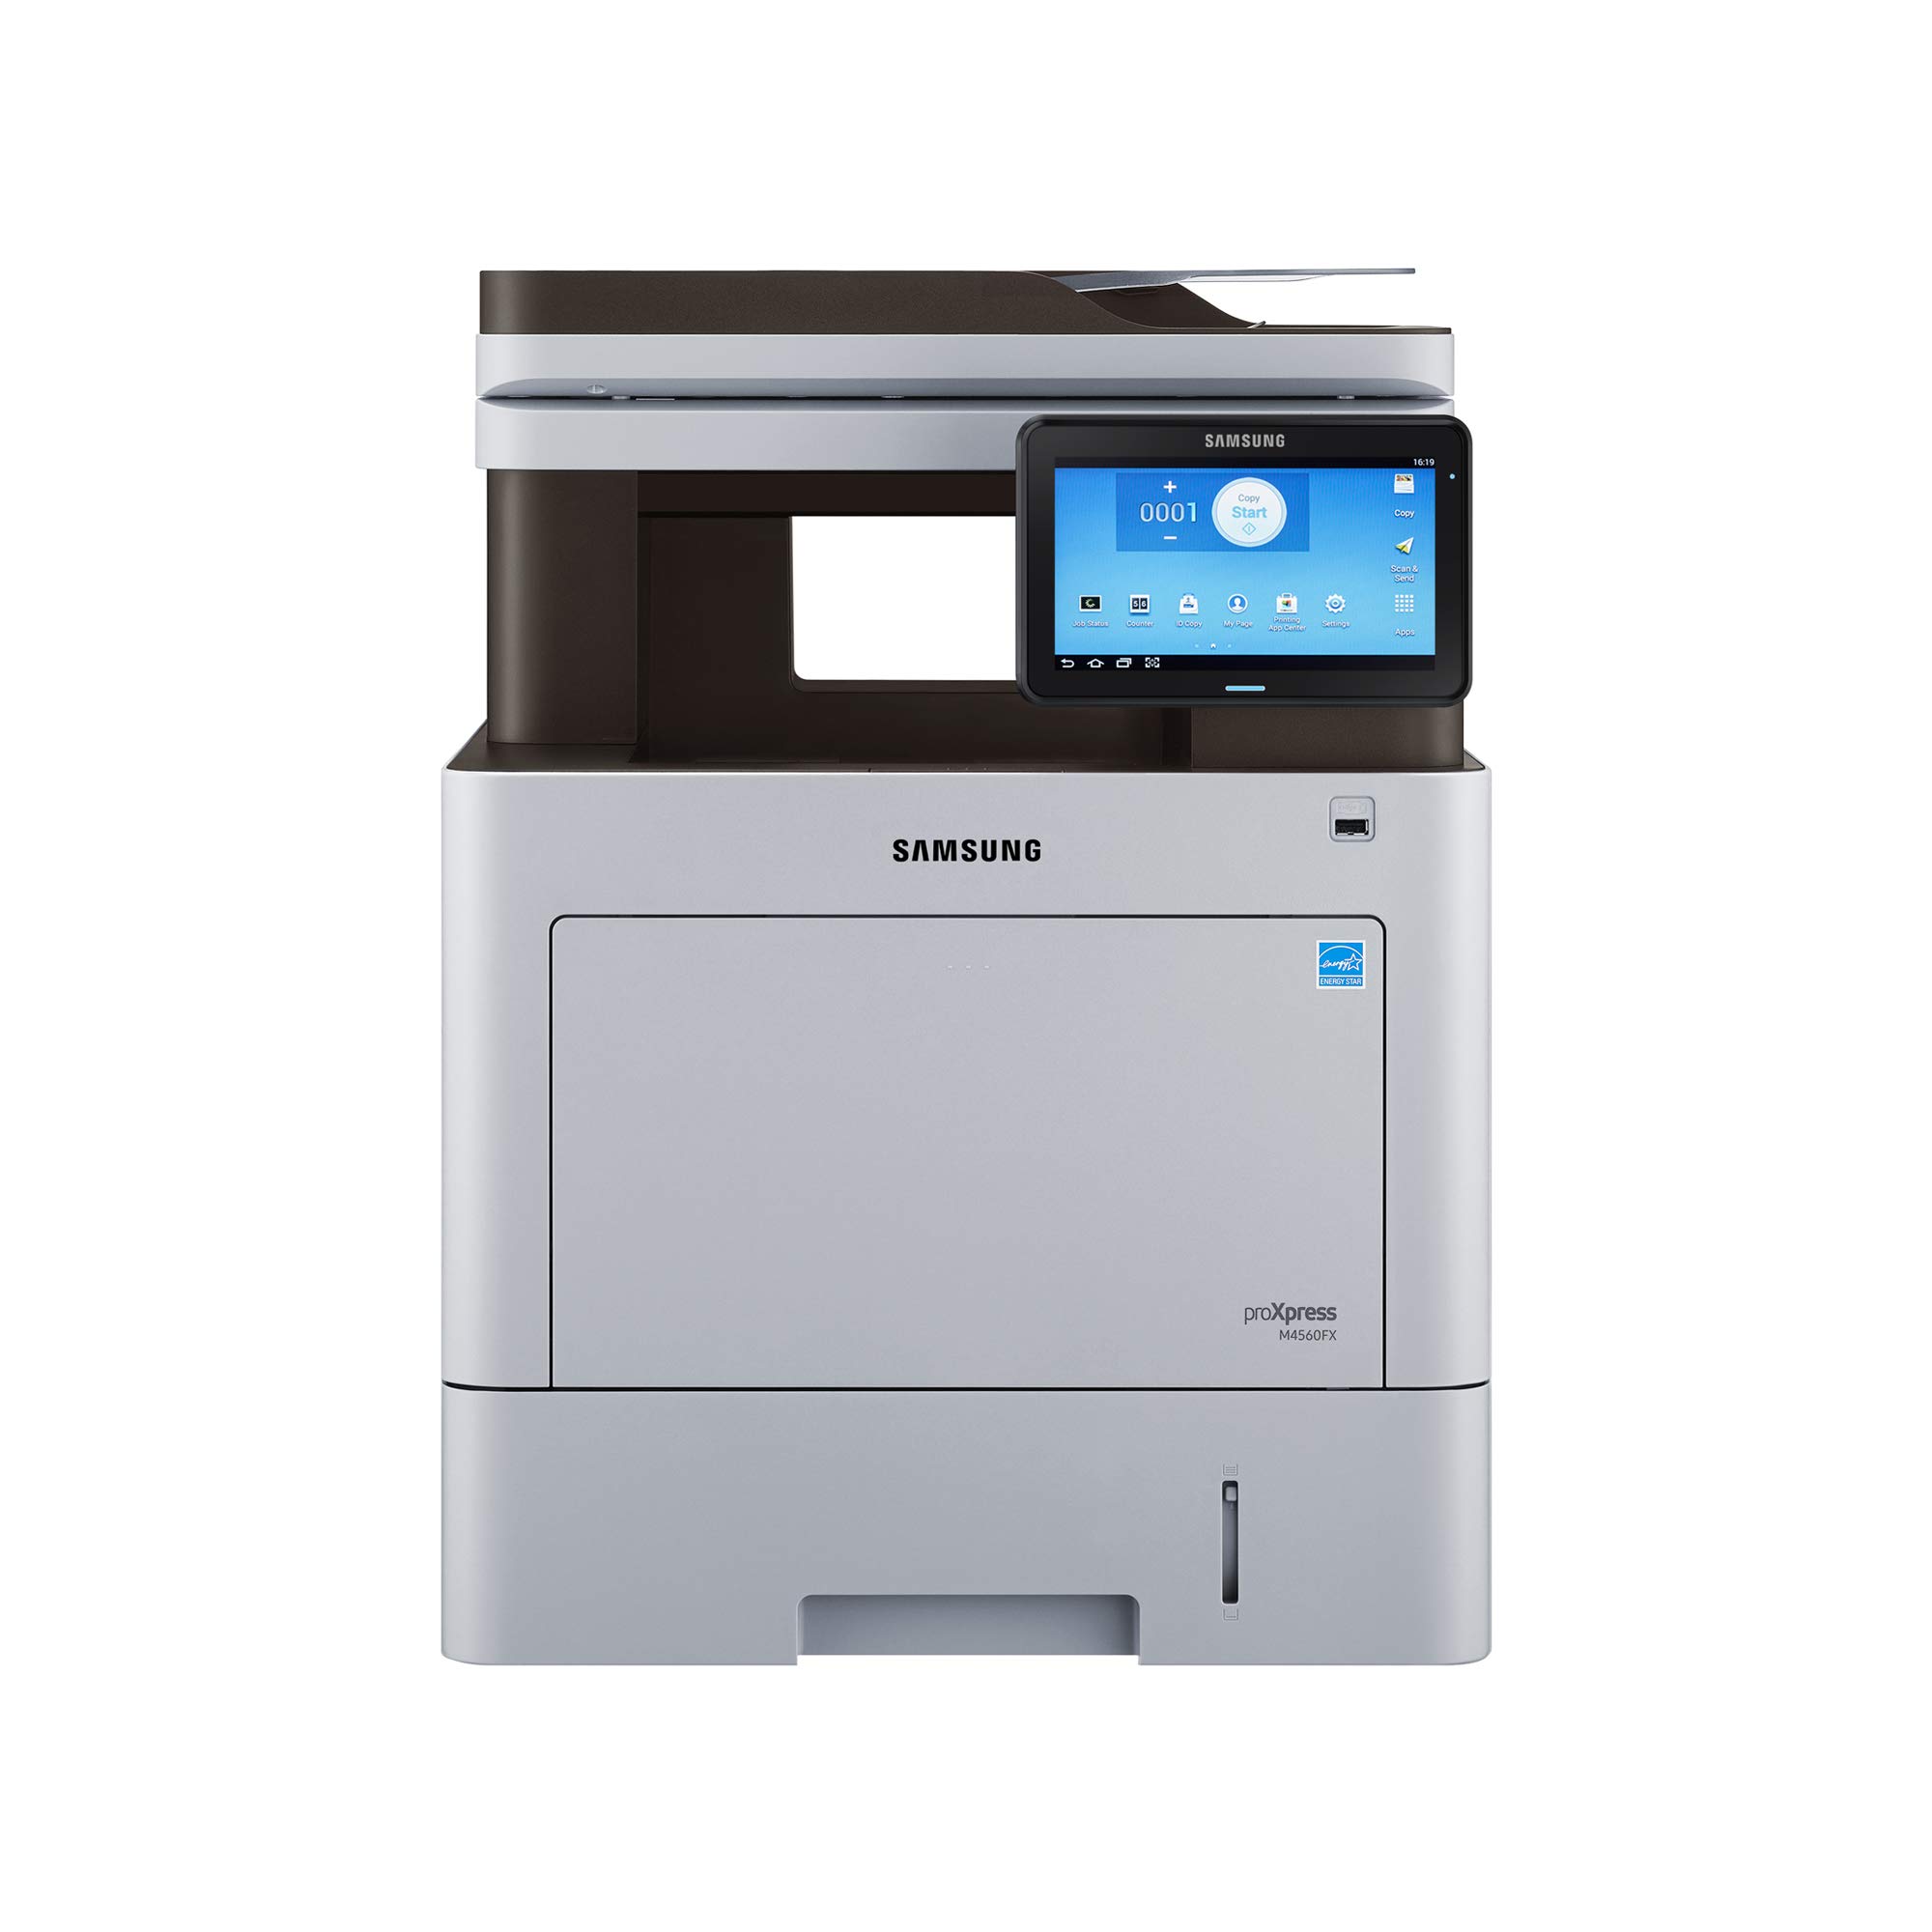 Samsung ProXpress SL-M4562 Laser Multifunction Printer series